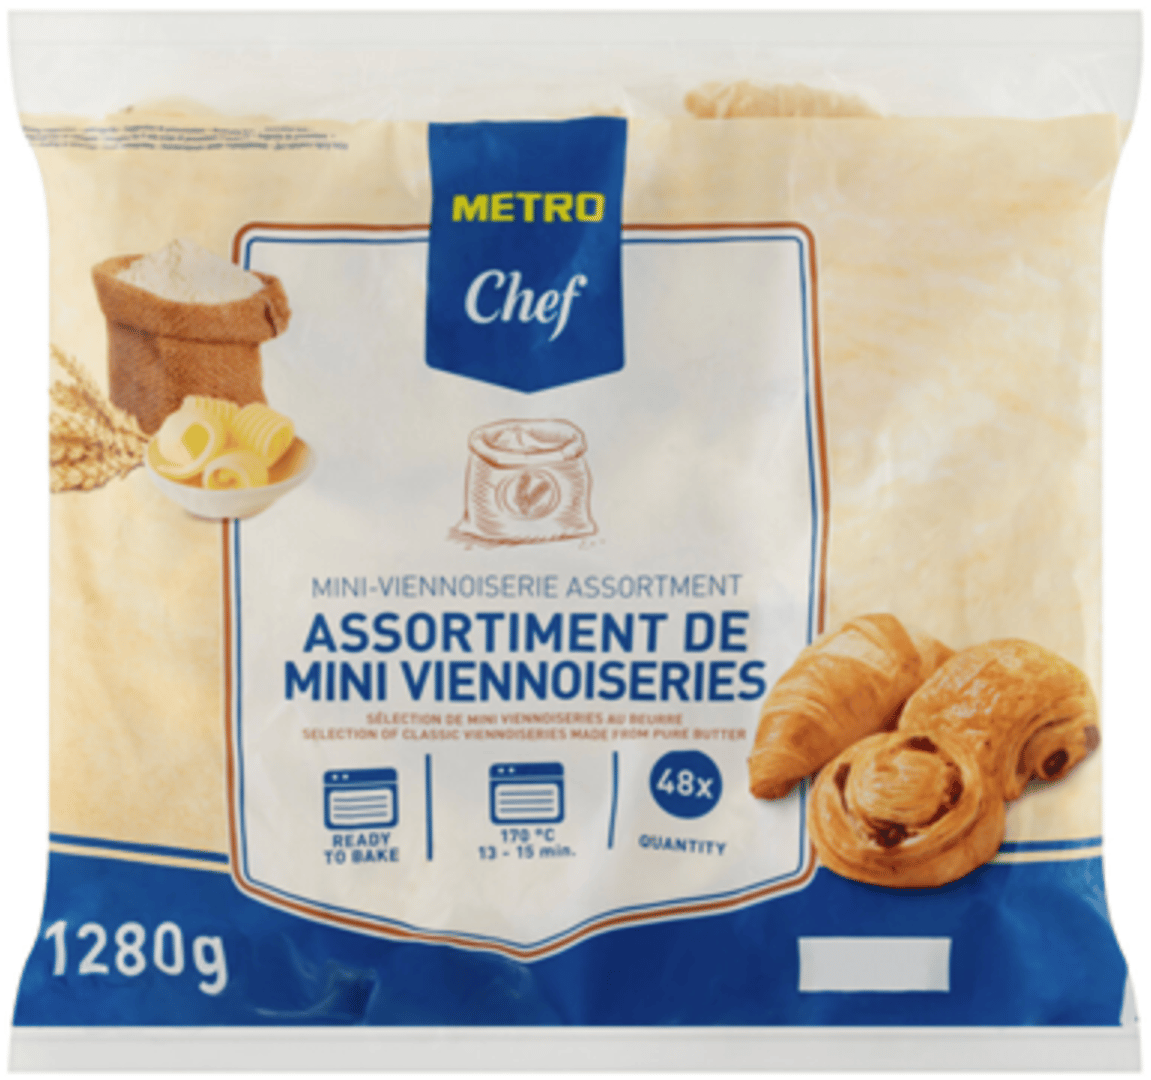 METRO Chef - Mini Pastry Mix 48 Stück tiefgefroren - 1,28 kg Packung